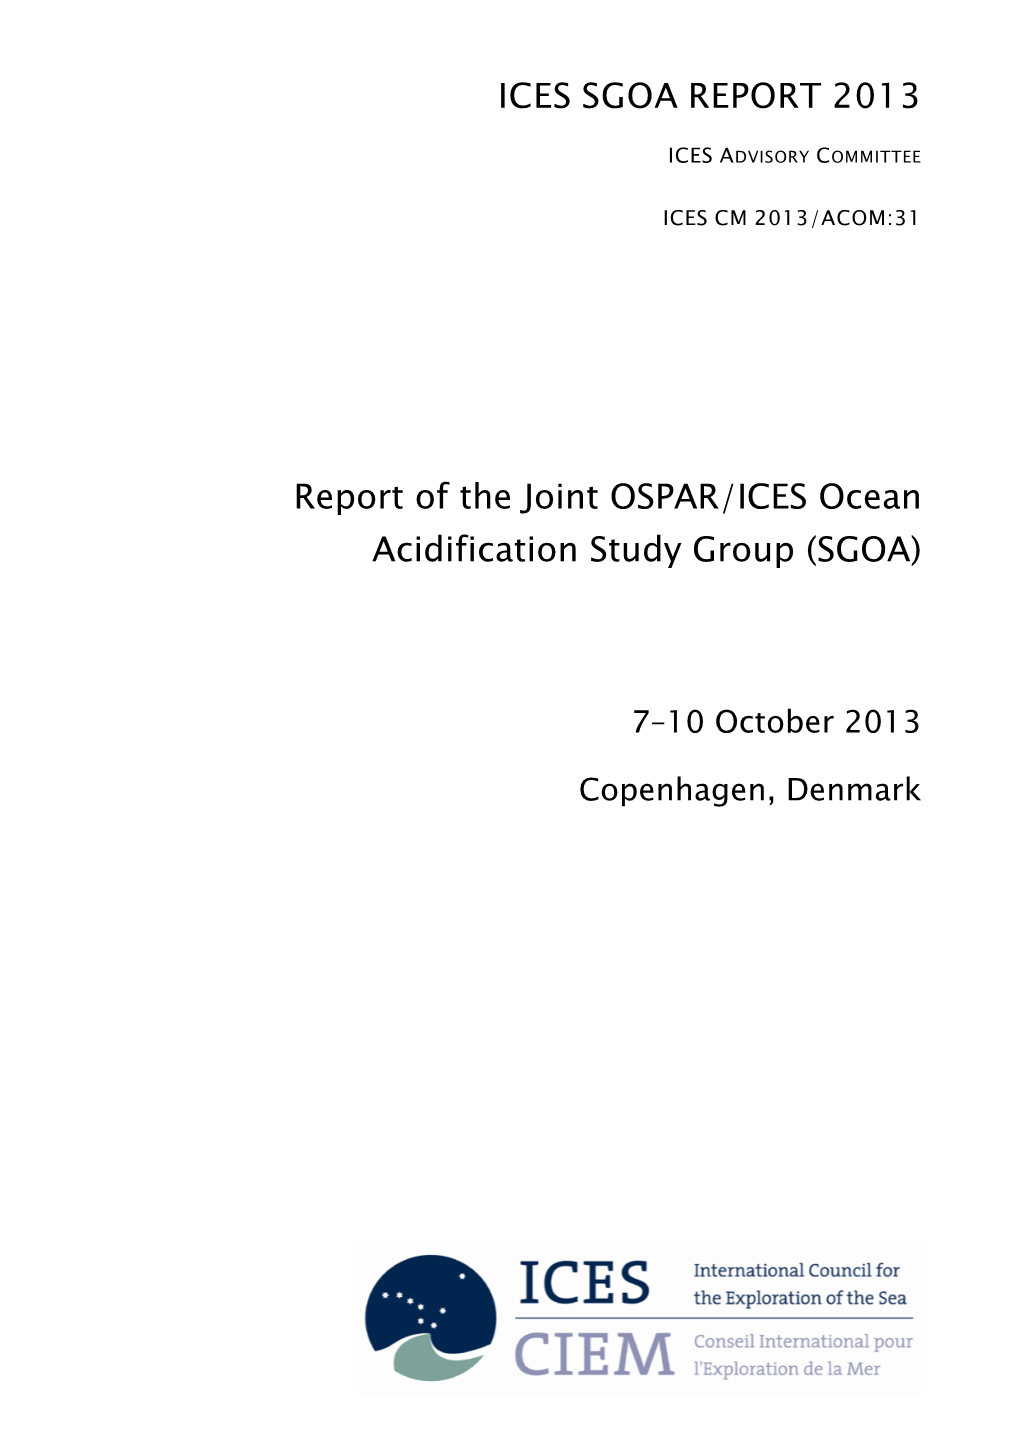 Report of the Joint OSPAR/ICES Ocean Acidification Study Group (SGOA)